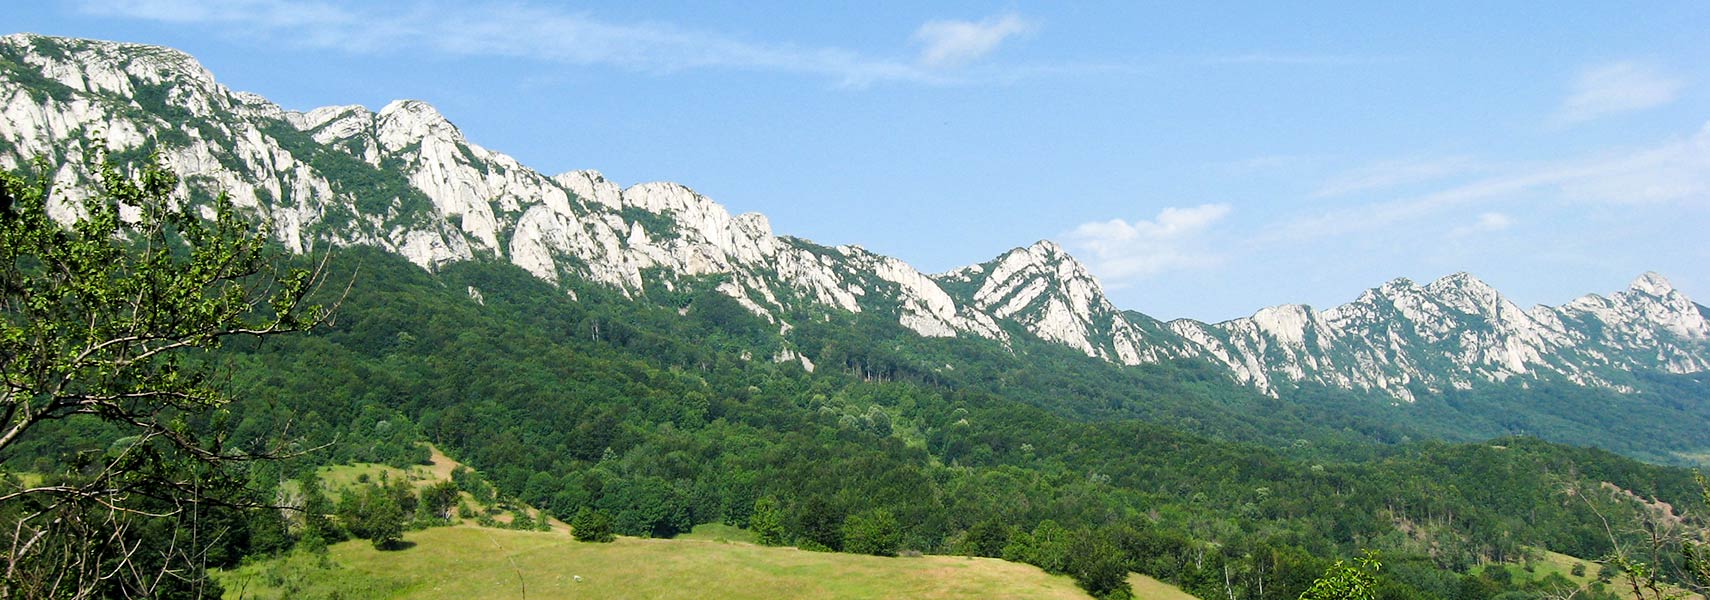 Veliki Krš mountain Serbia